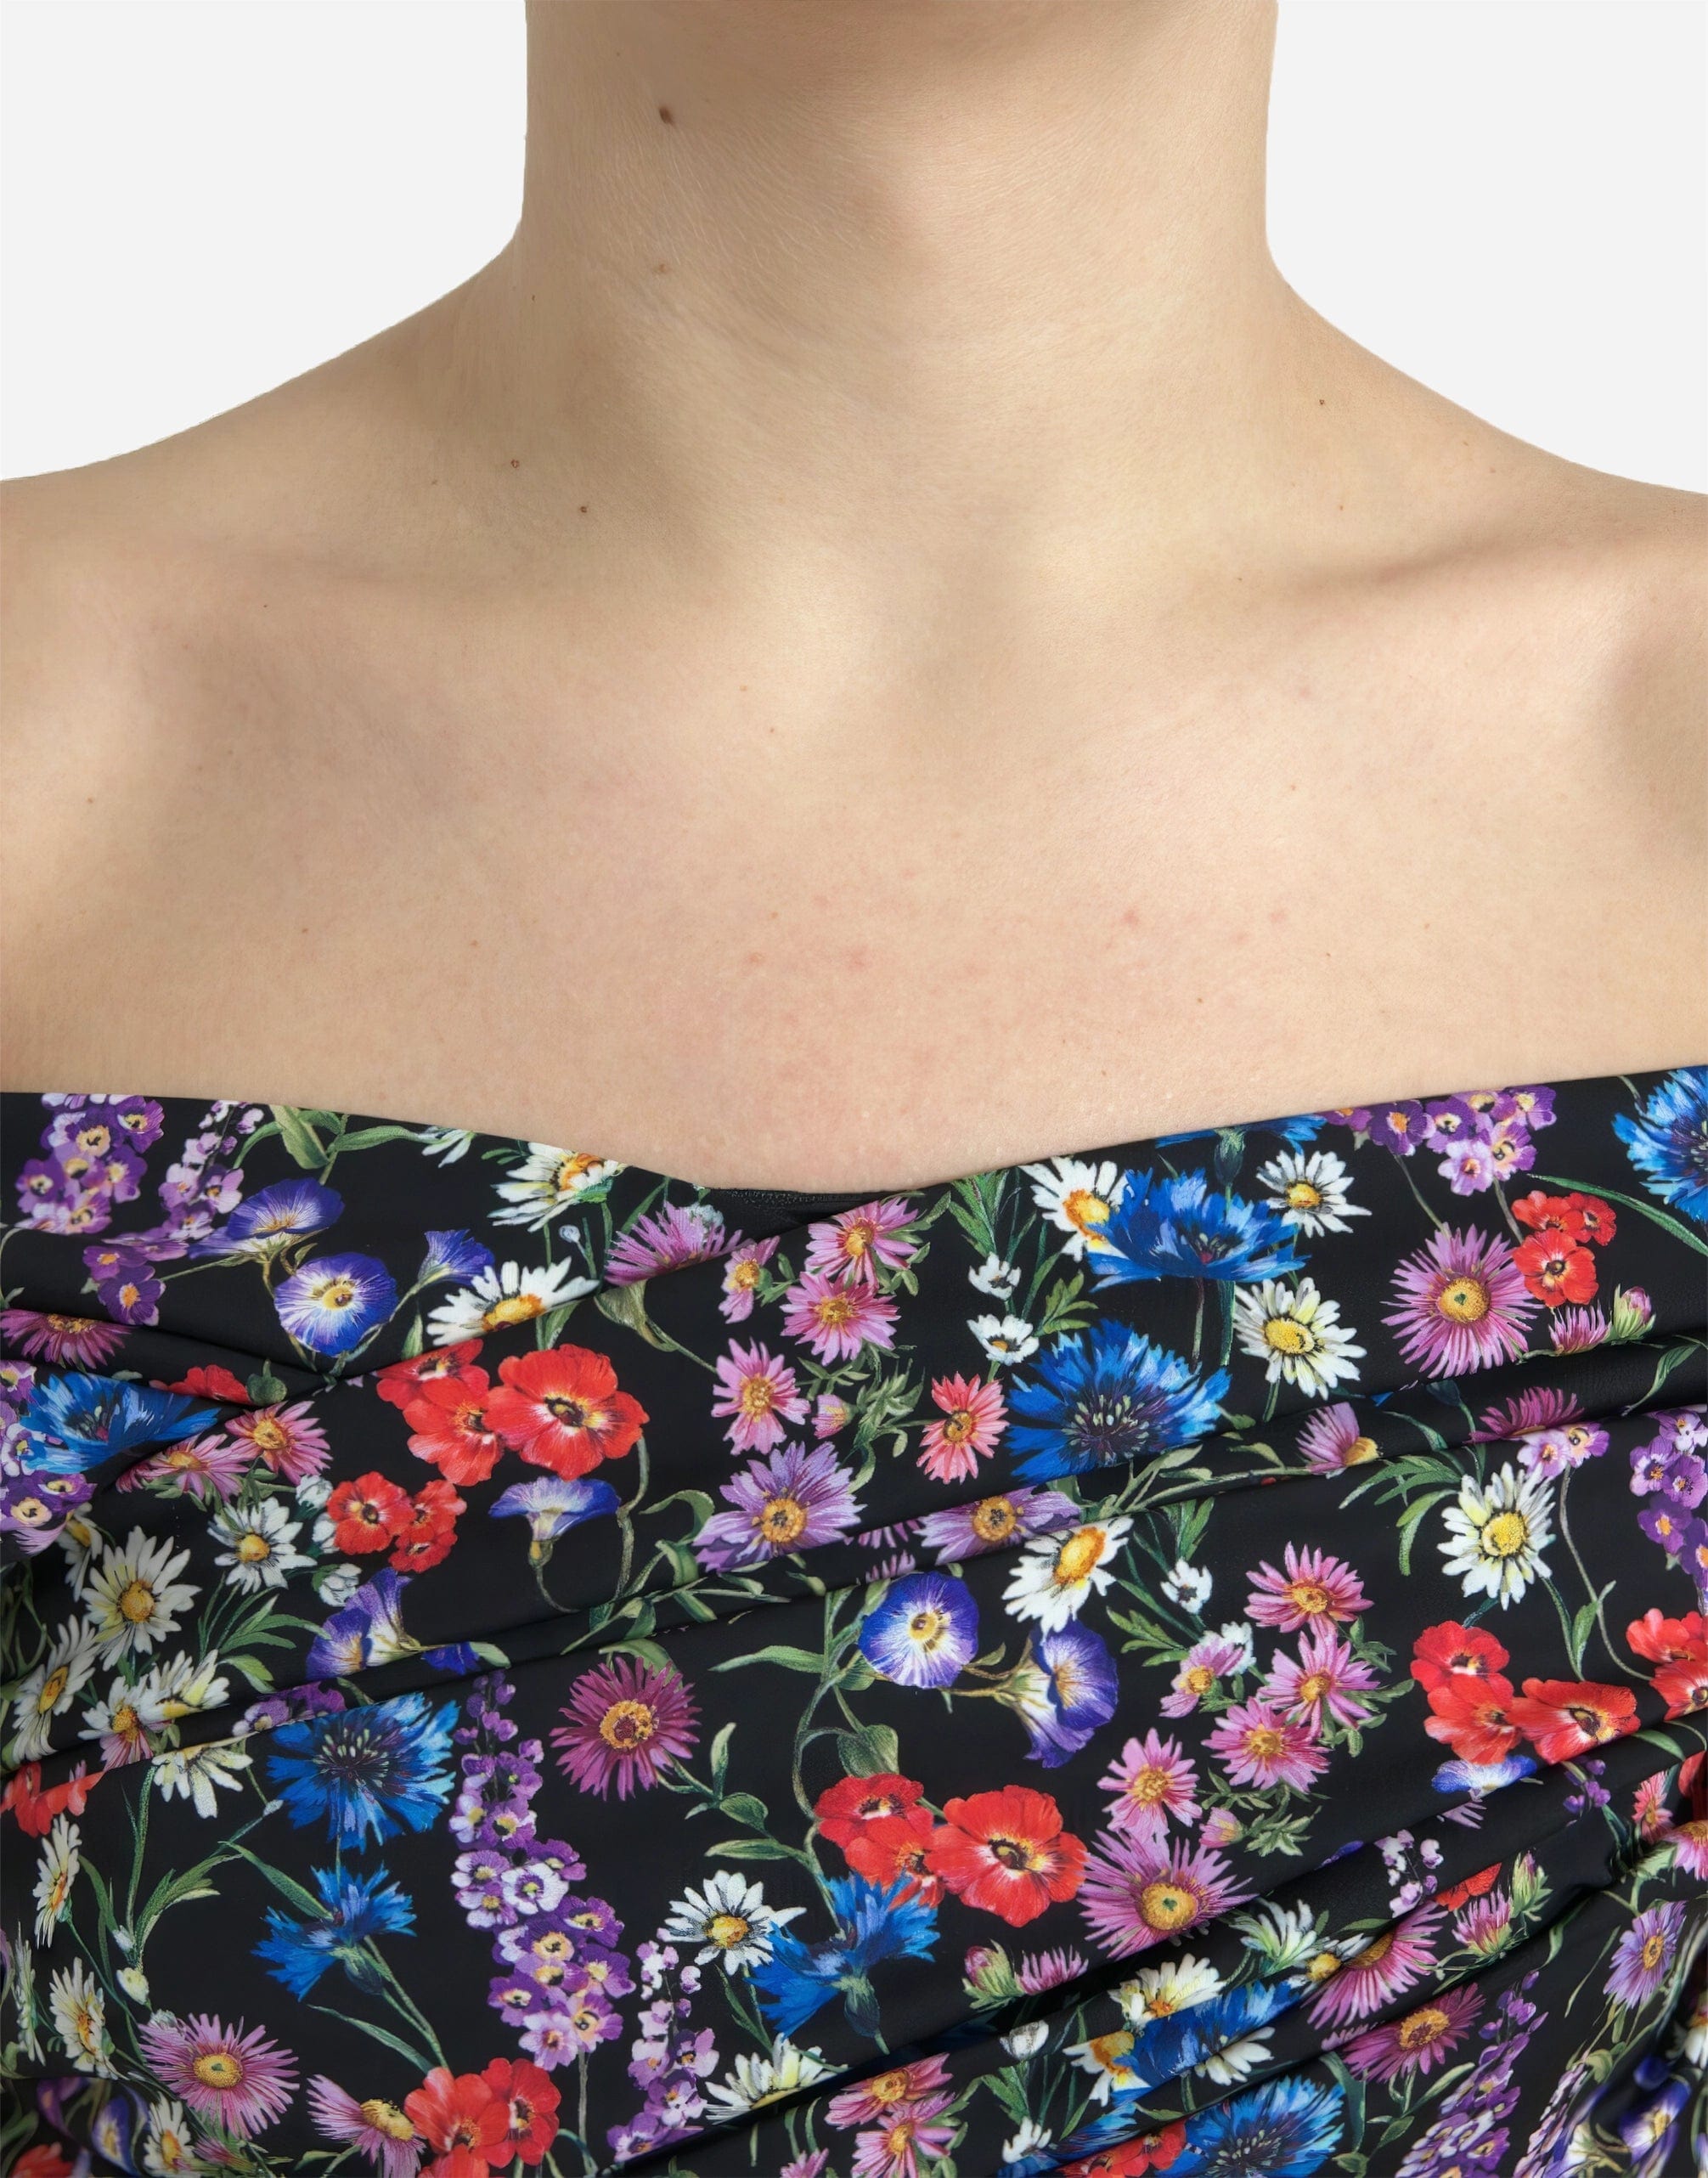 Dolce & Gabbana Off-The-Shoulder Dress With Floral Print